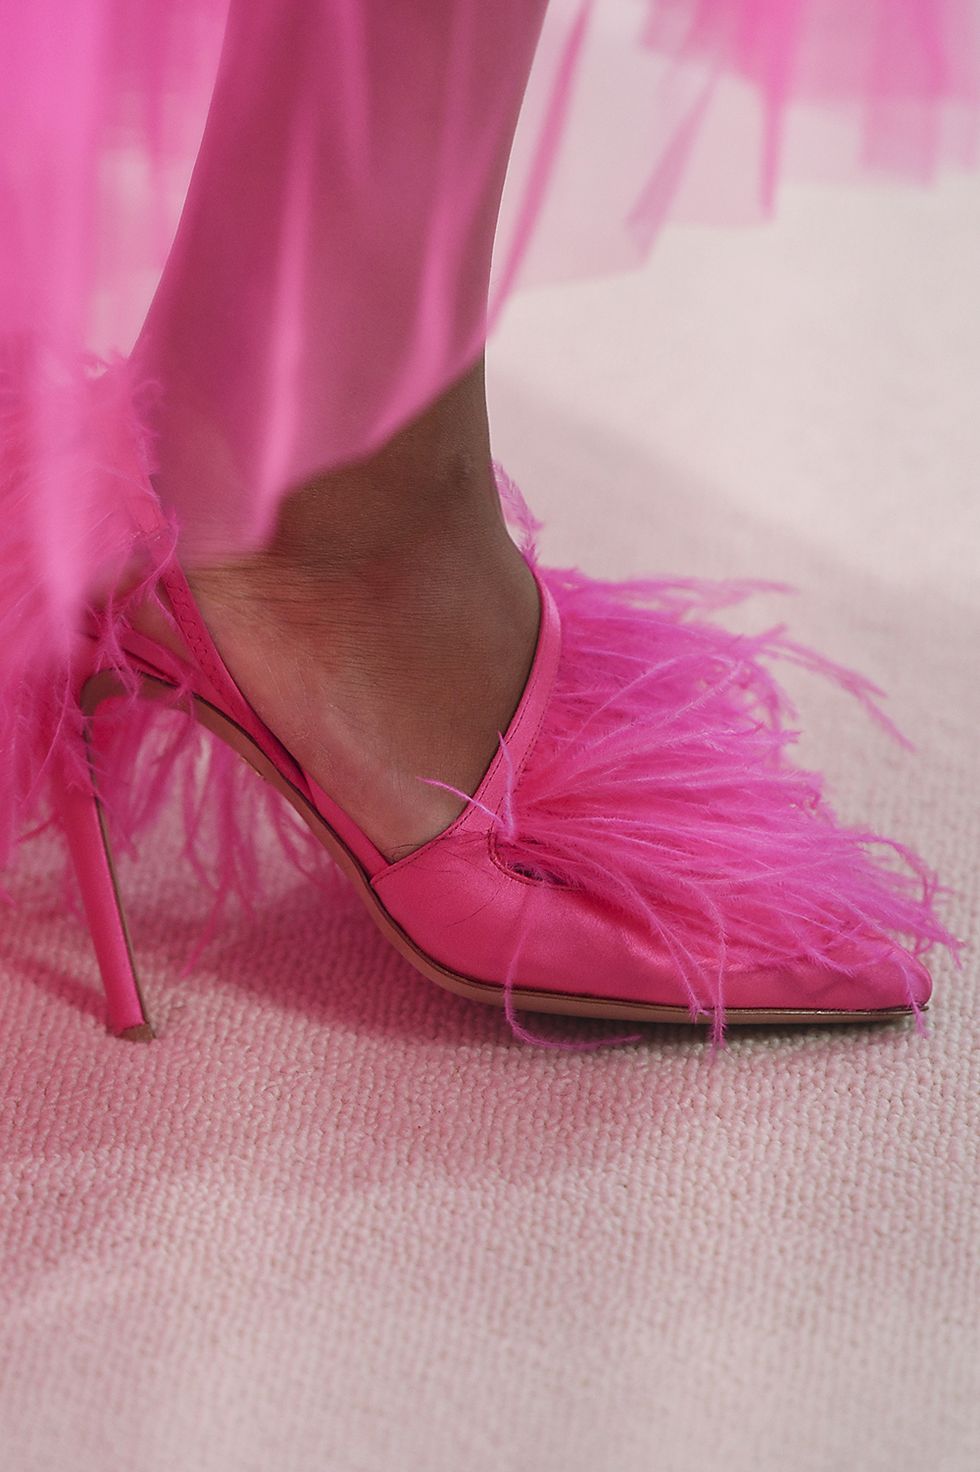 Footwear, Pink, Shoe, Red, High heels, Leg, Magenta, Dress, Dance, Haute couture, 